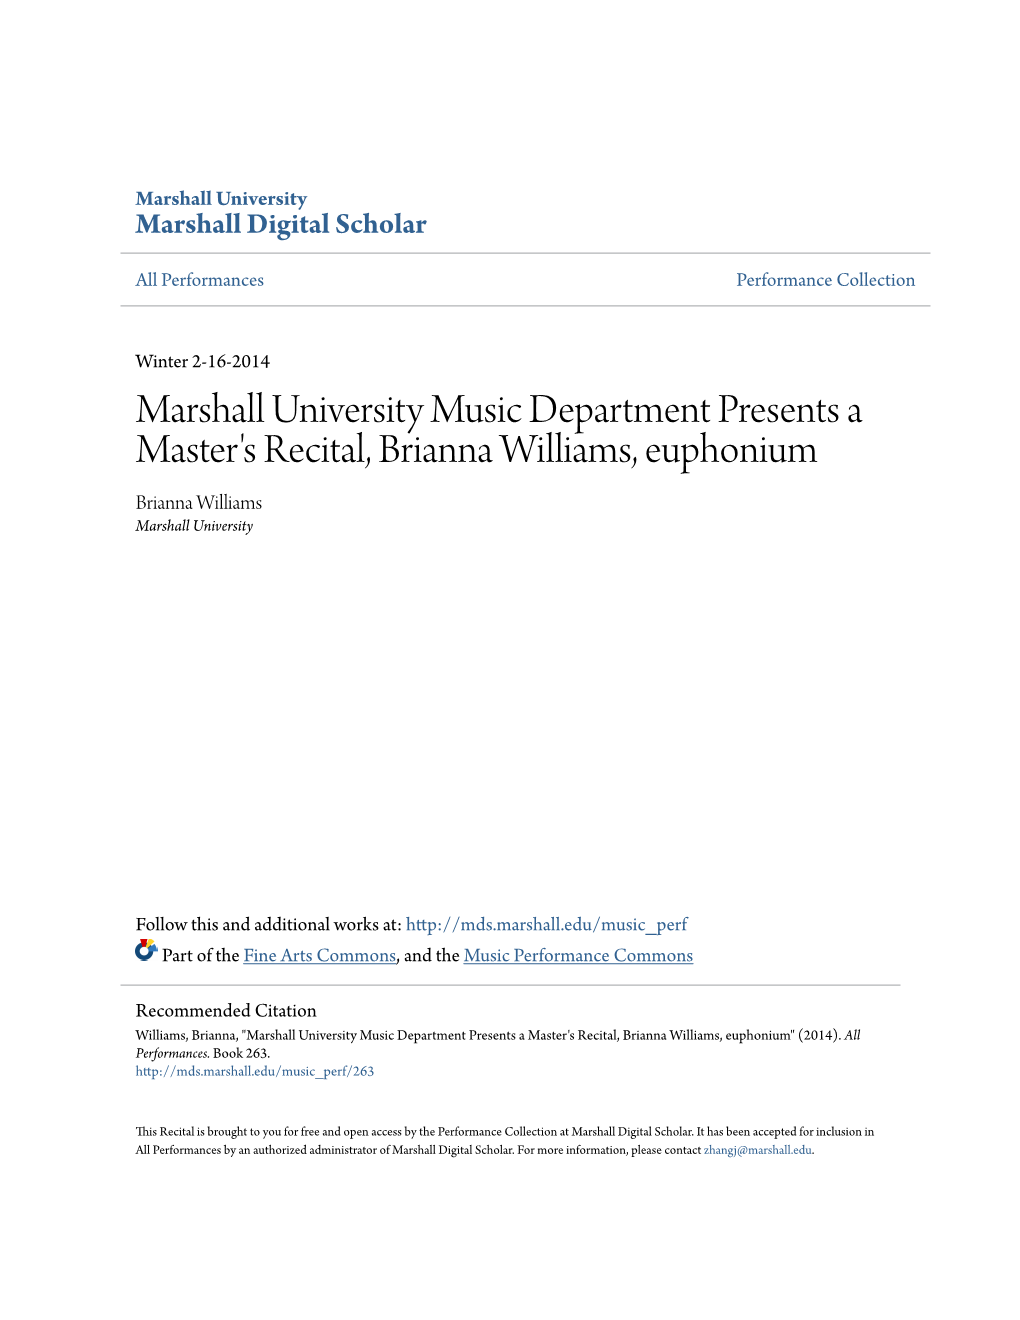 Marshall University Music Department Presents a Master's Recital, Brianna Williams, Euphonium Brianna Williams Marshall University